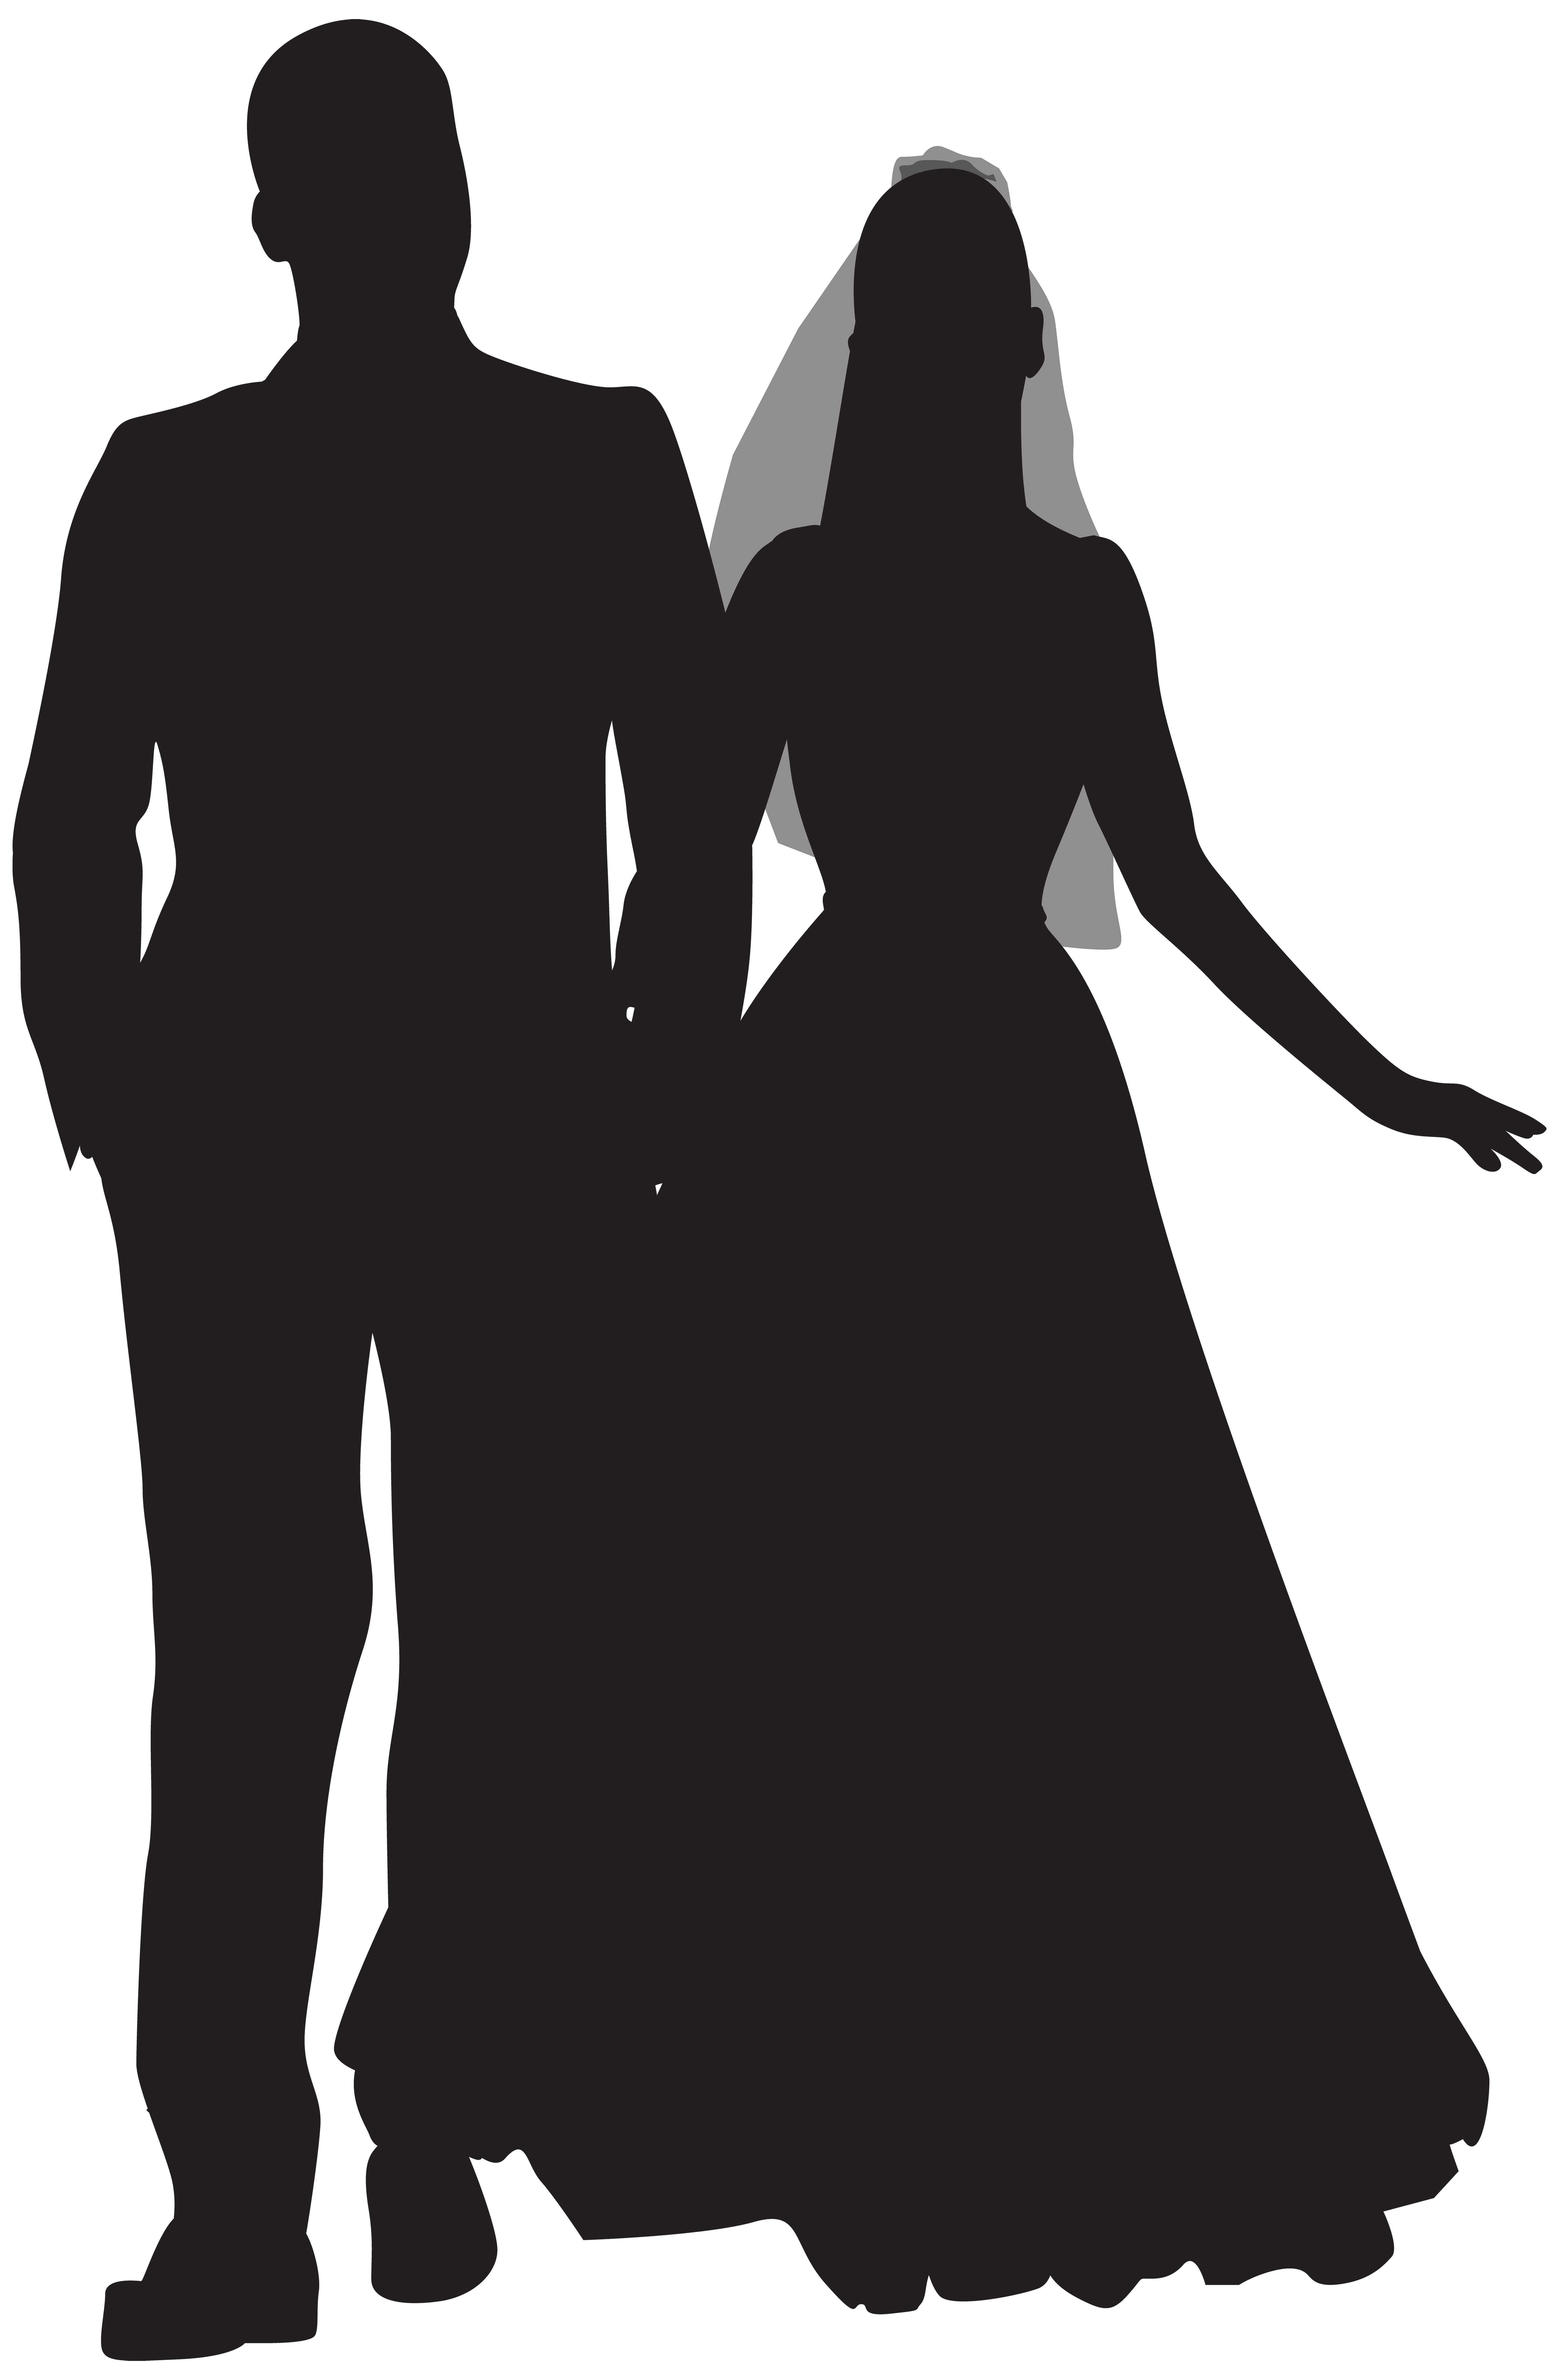 wedding couple silhouette cute